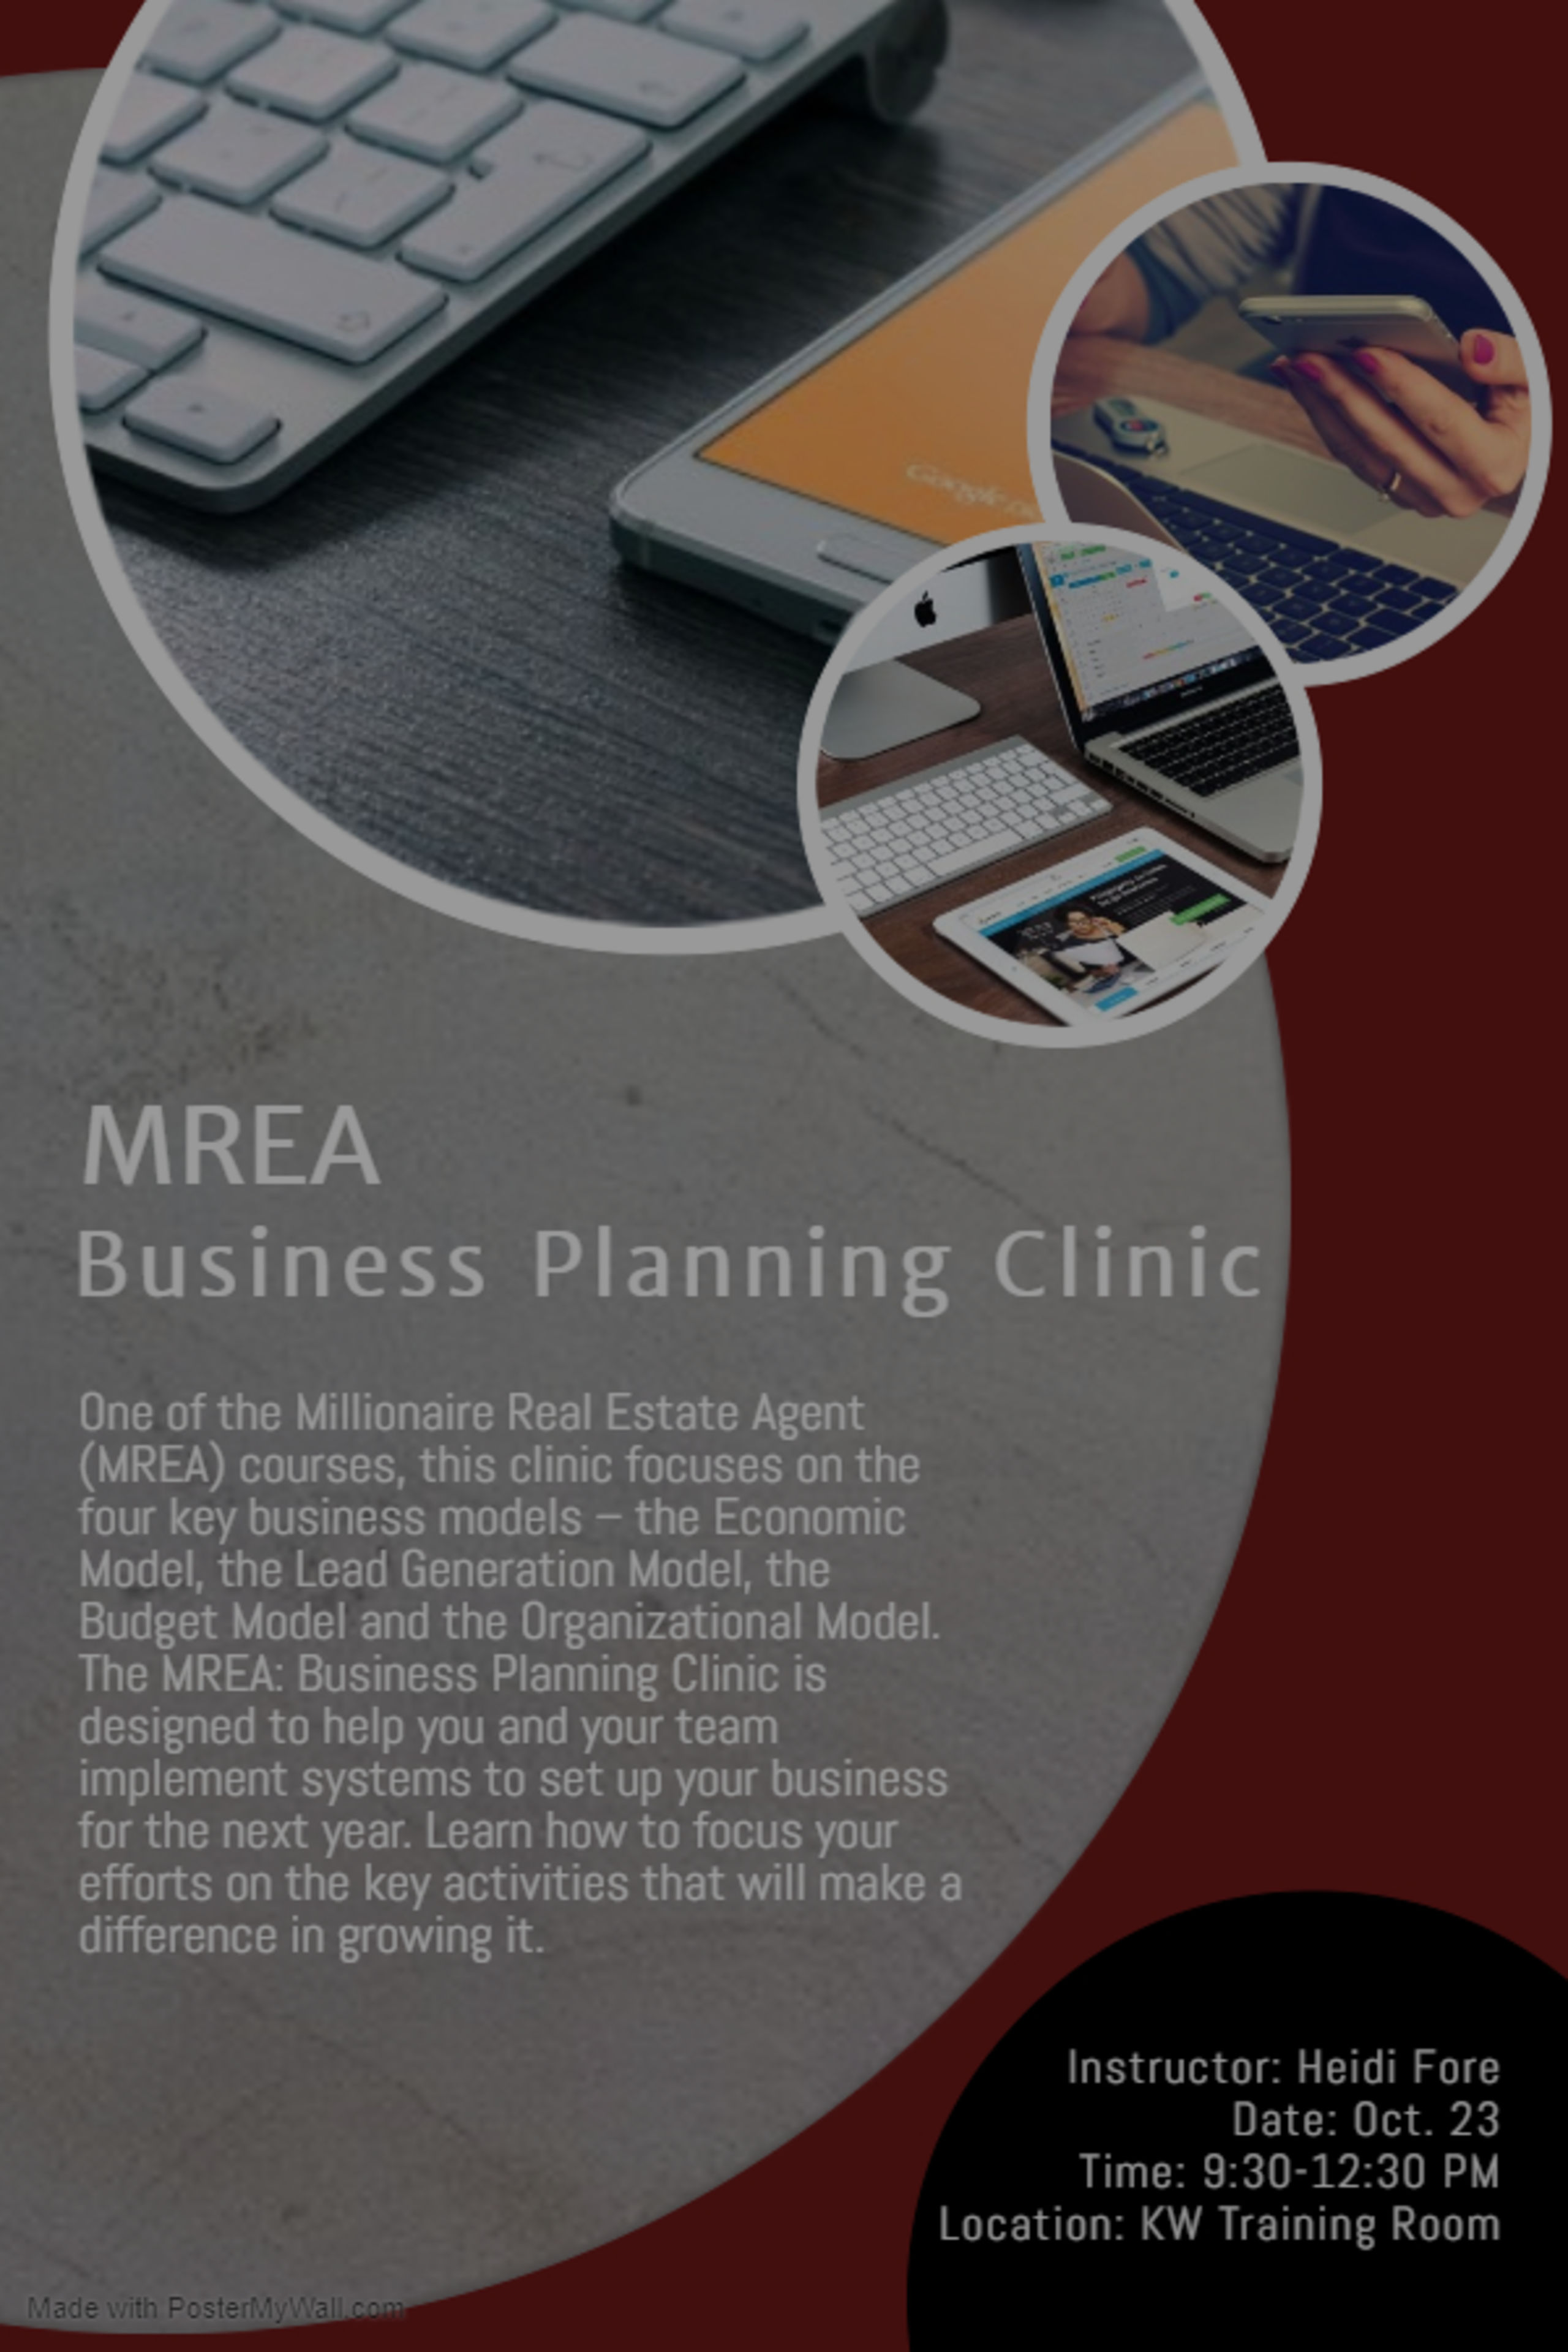 MREA Business Planning Clinic